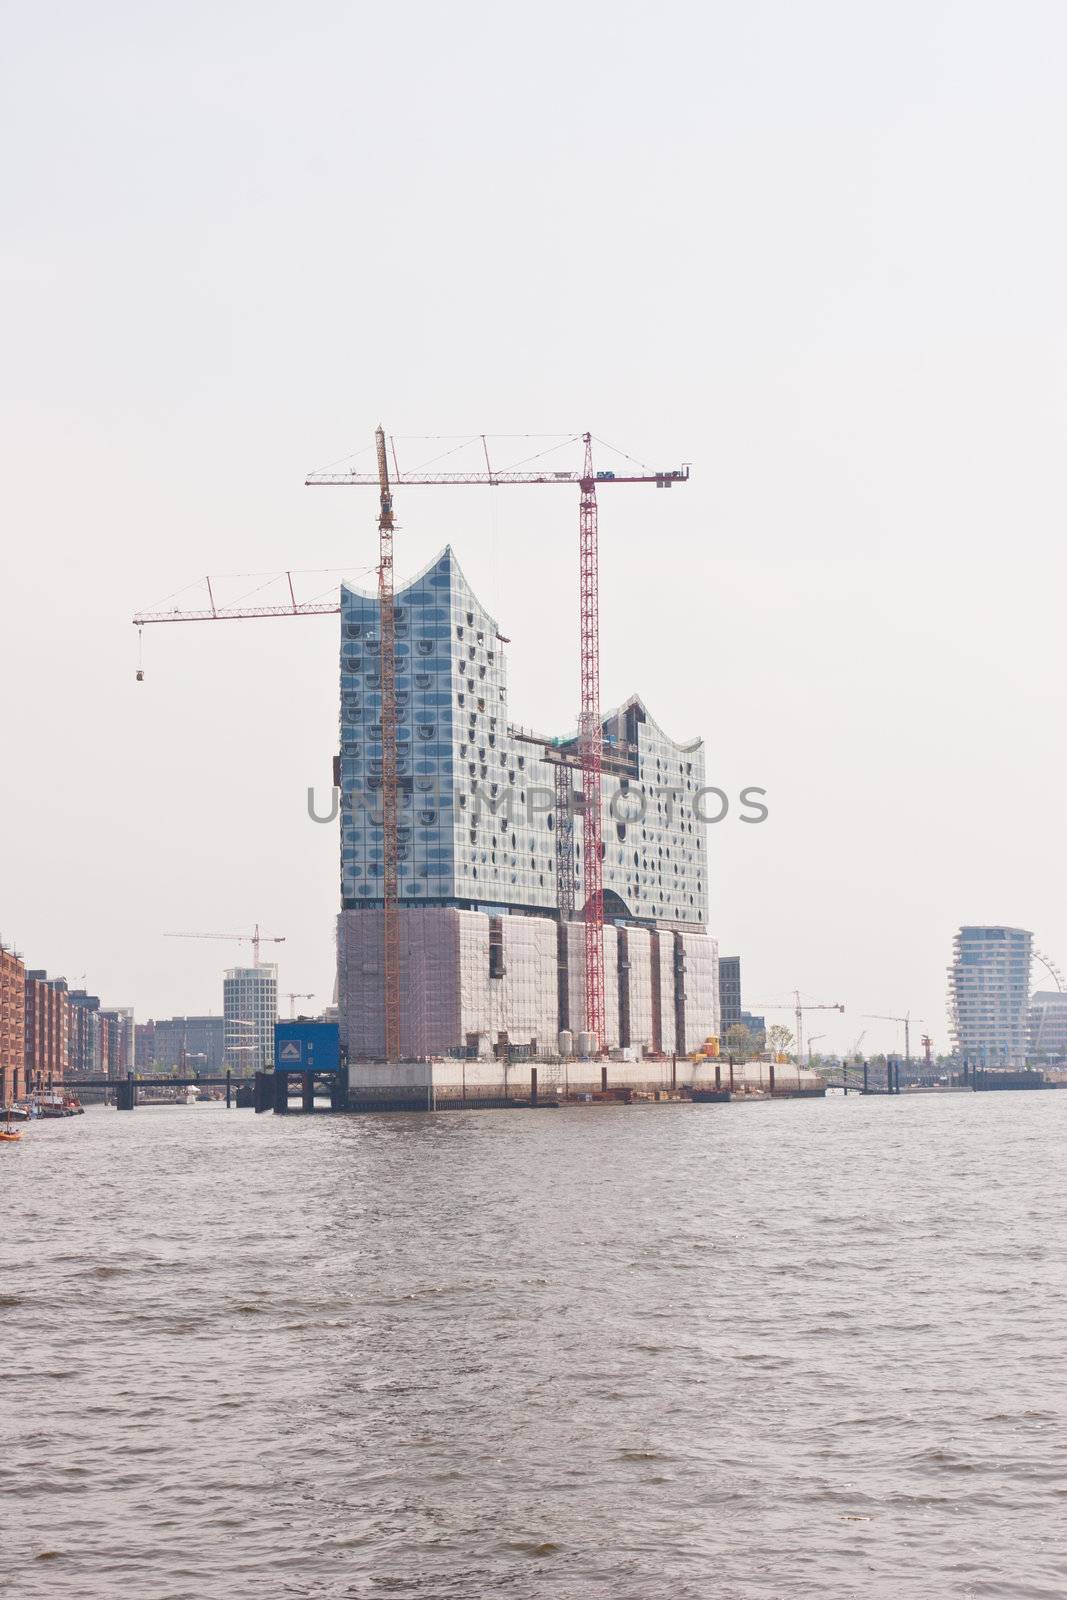 Elbphilharmonie Hamburg is a concert hall under construction in the HafenCity quarter of Hamburg, Germany